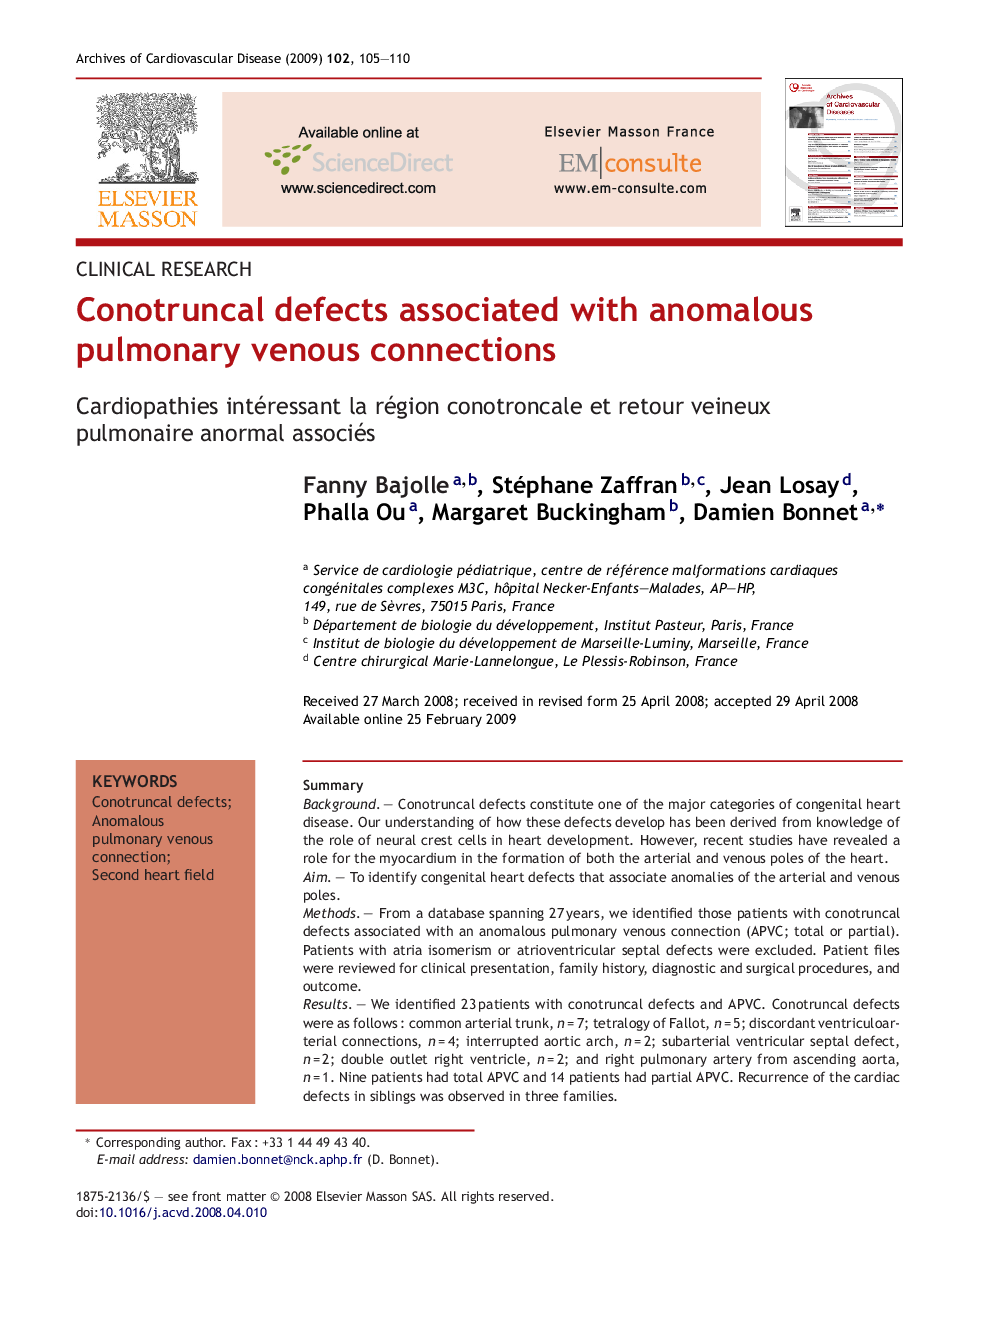 Conotruncal defects associated with anomalous pulmonary venous connections